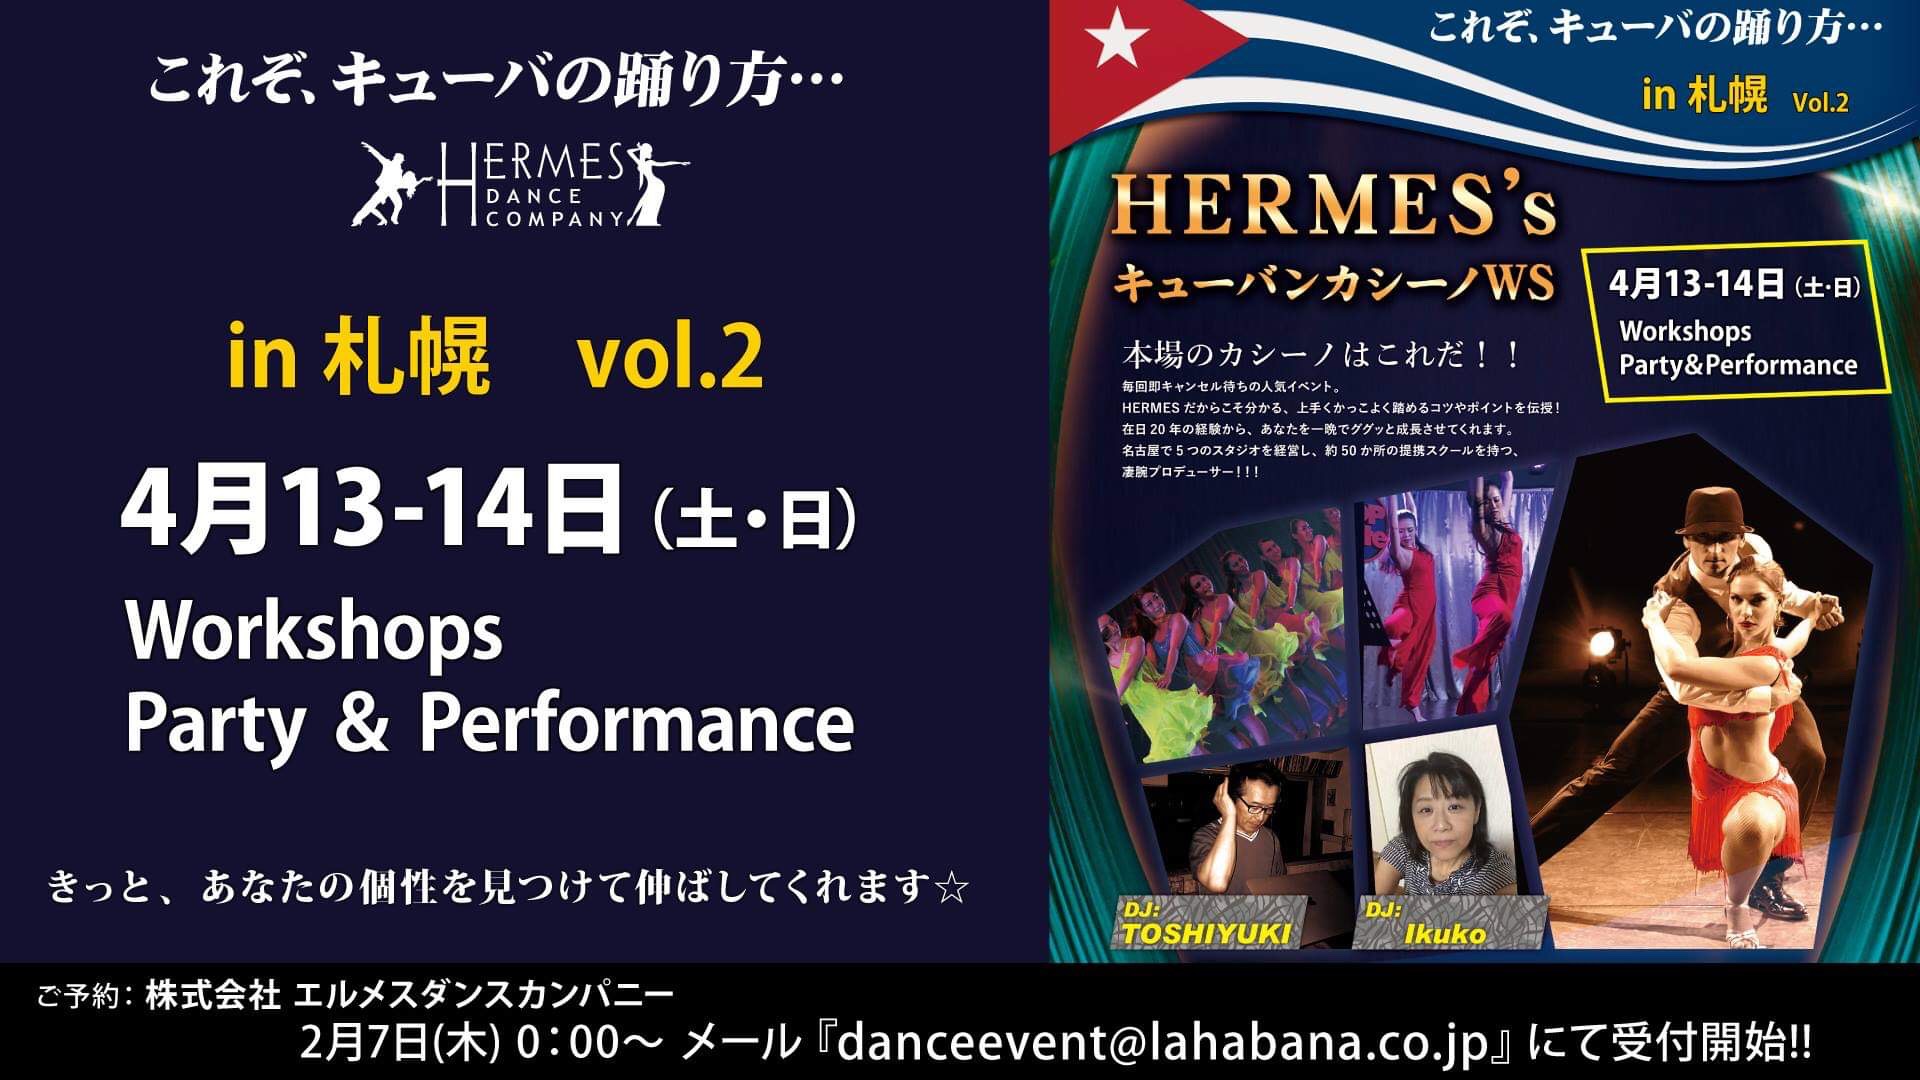 Hermes’s札幌イベントVol.2☆